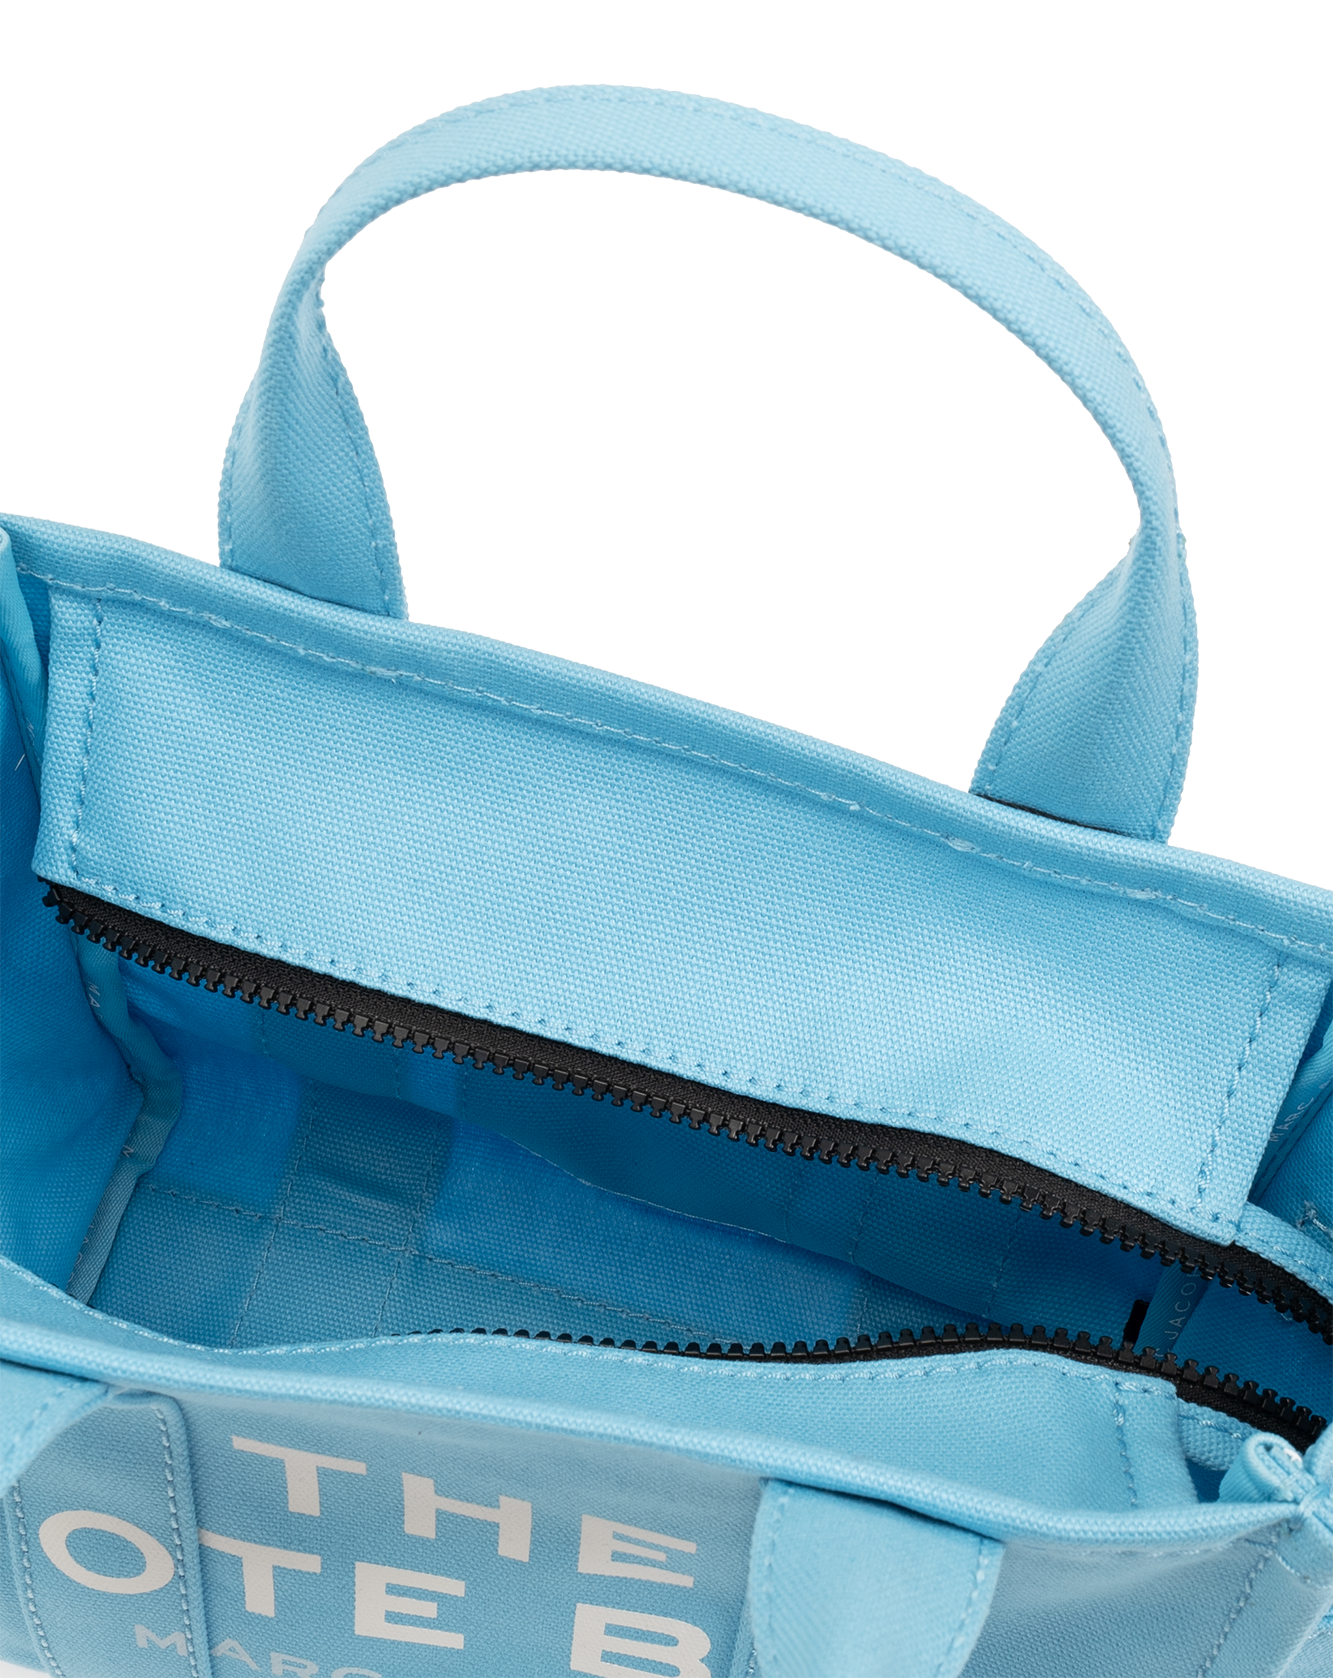 Marc Jacobs ‘The Tote Mini’ shopper bag